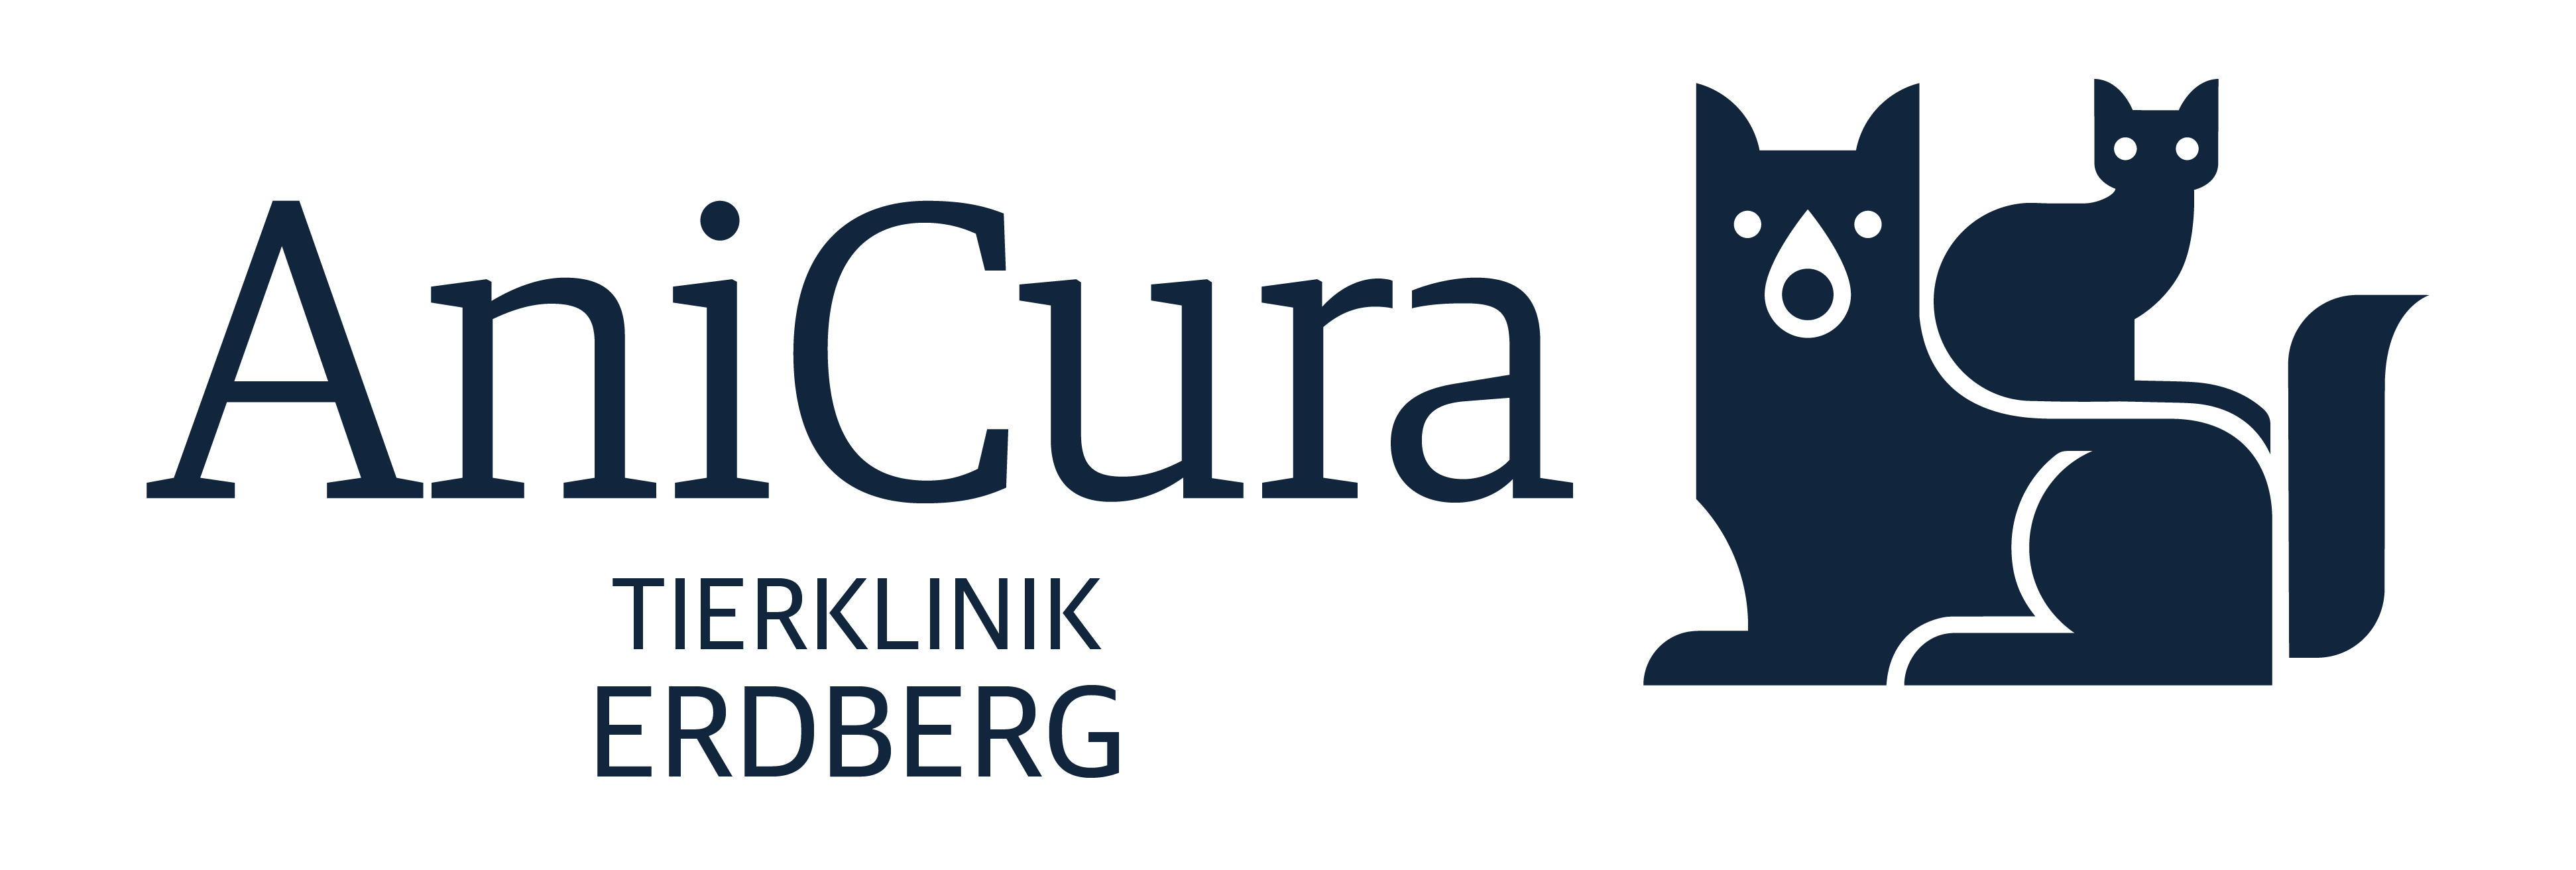 AniCura Tierklinik Erdberg logo